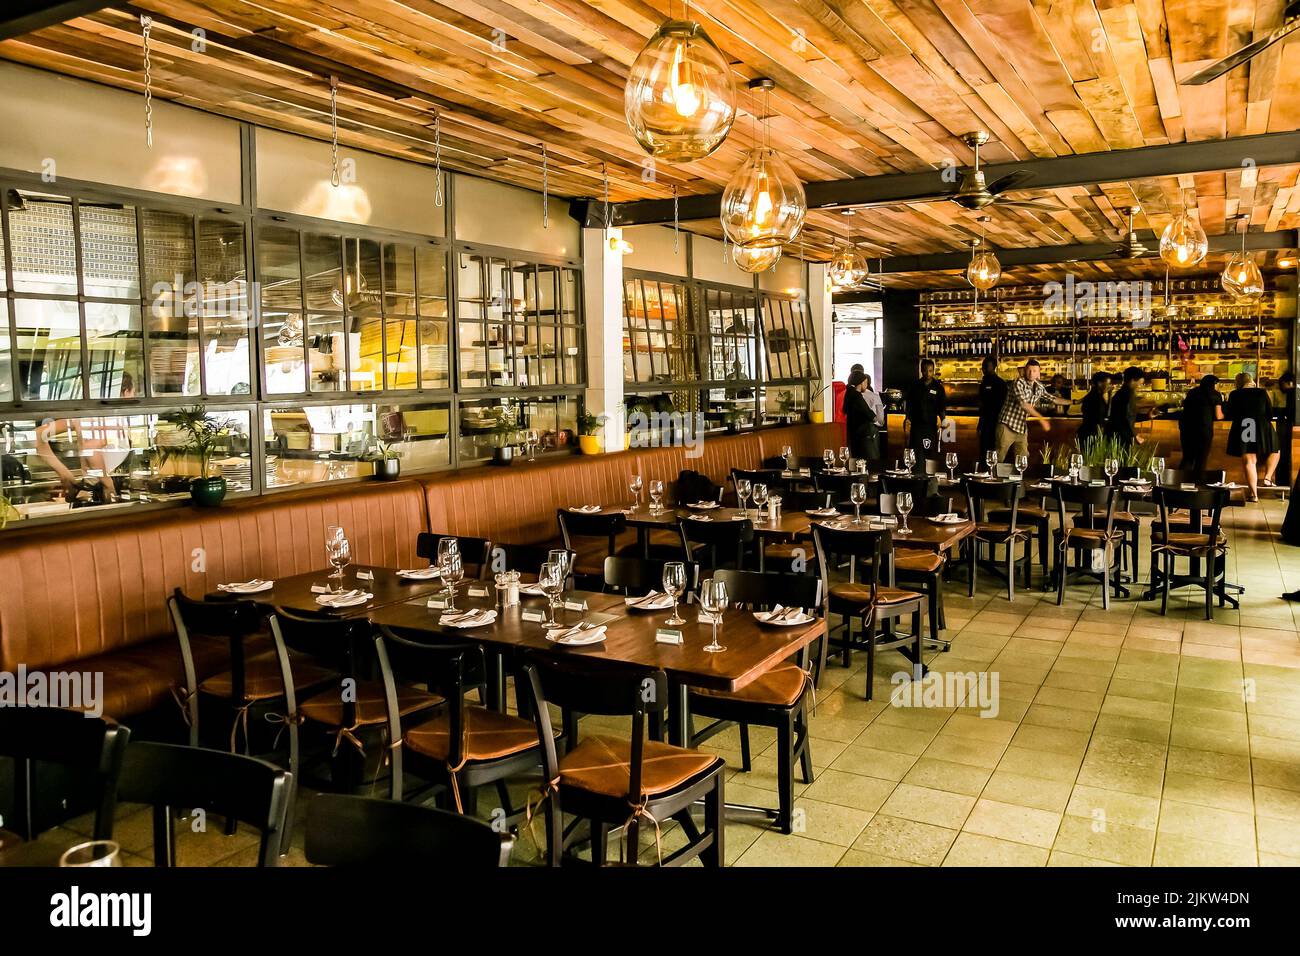 Johannesburg, South Africa - April 1, 2014: Interior decor and setup of stylish bistro restaurant Stock Photo